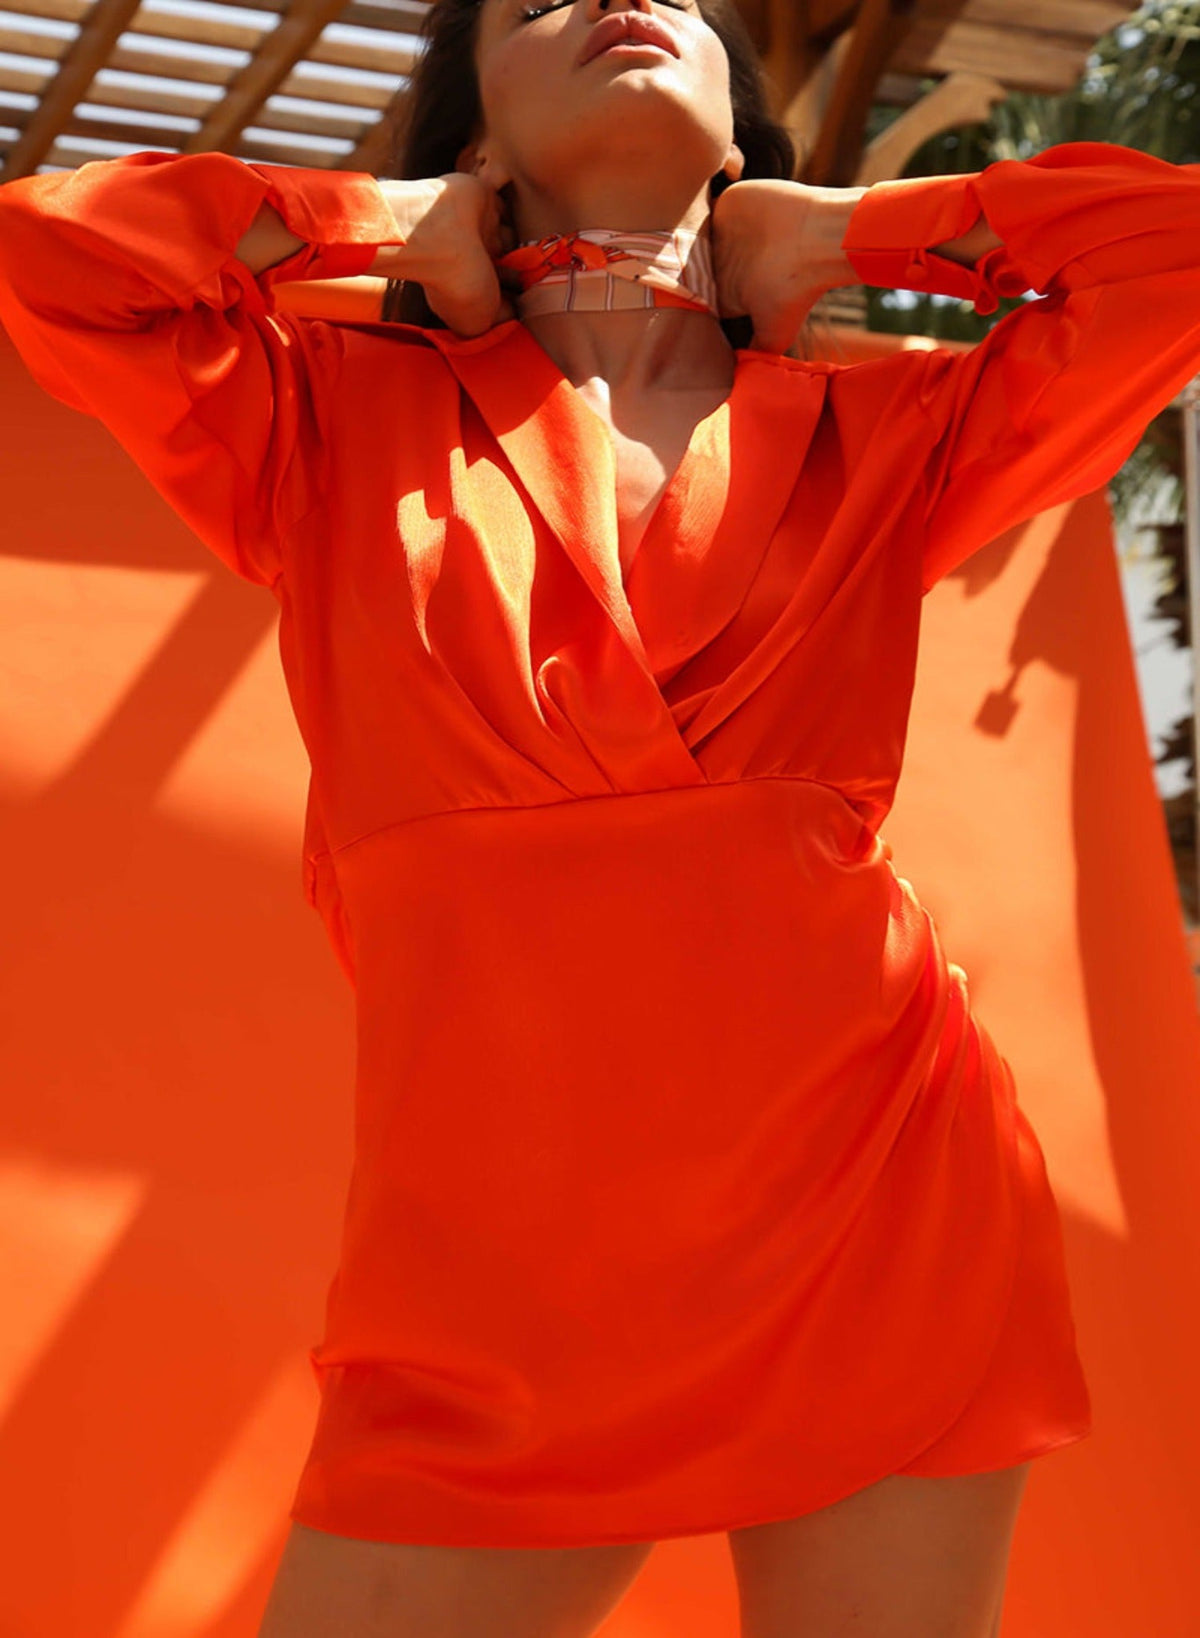 Into the Orange Dress